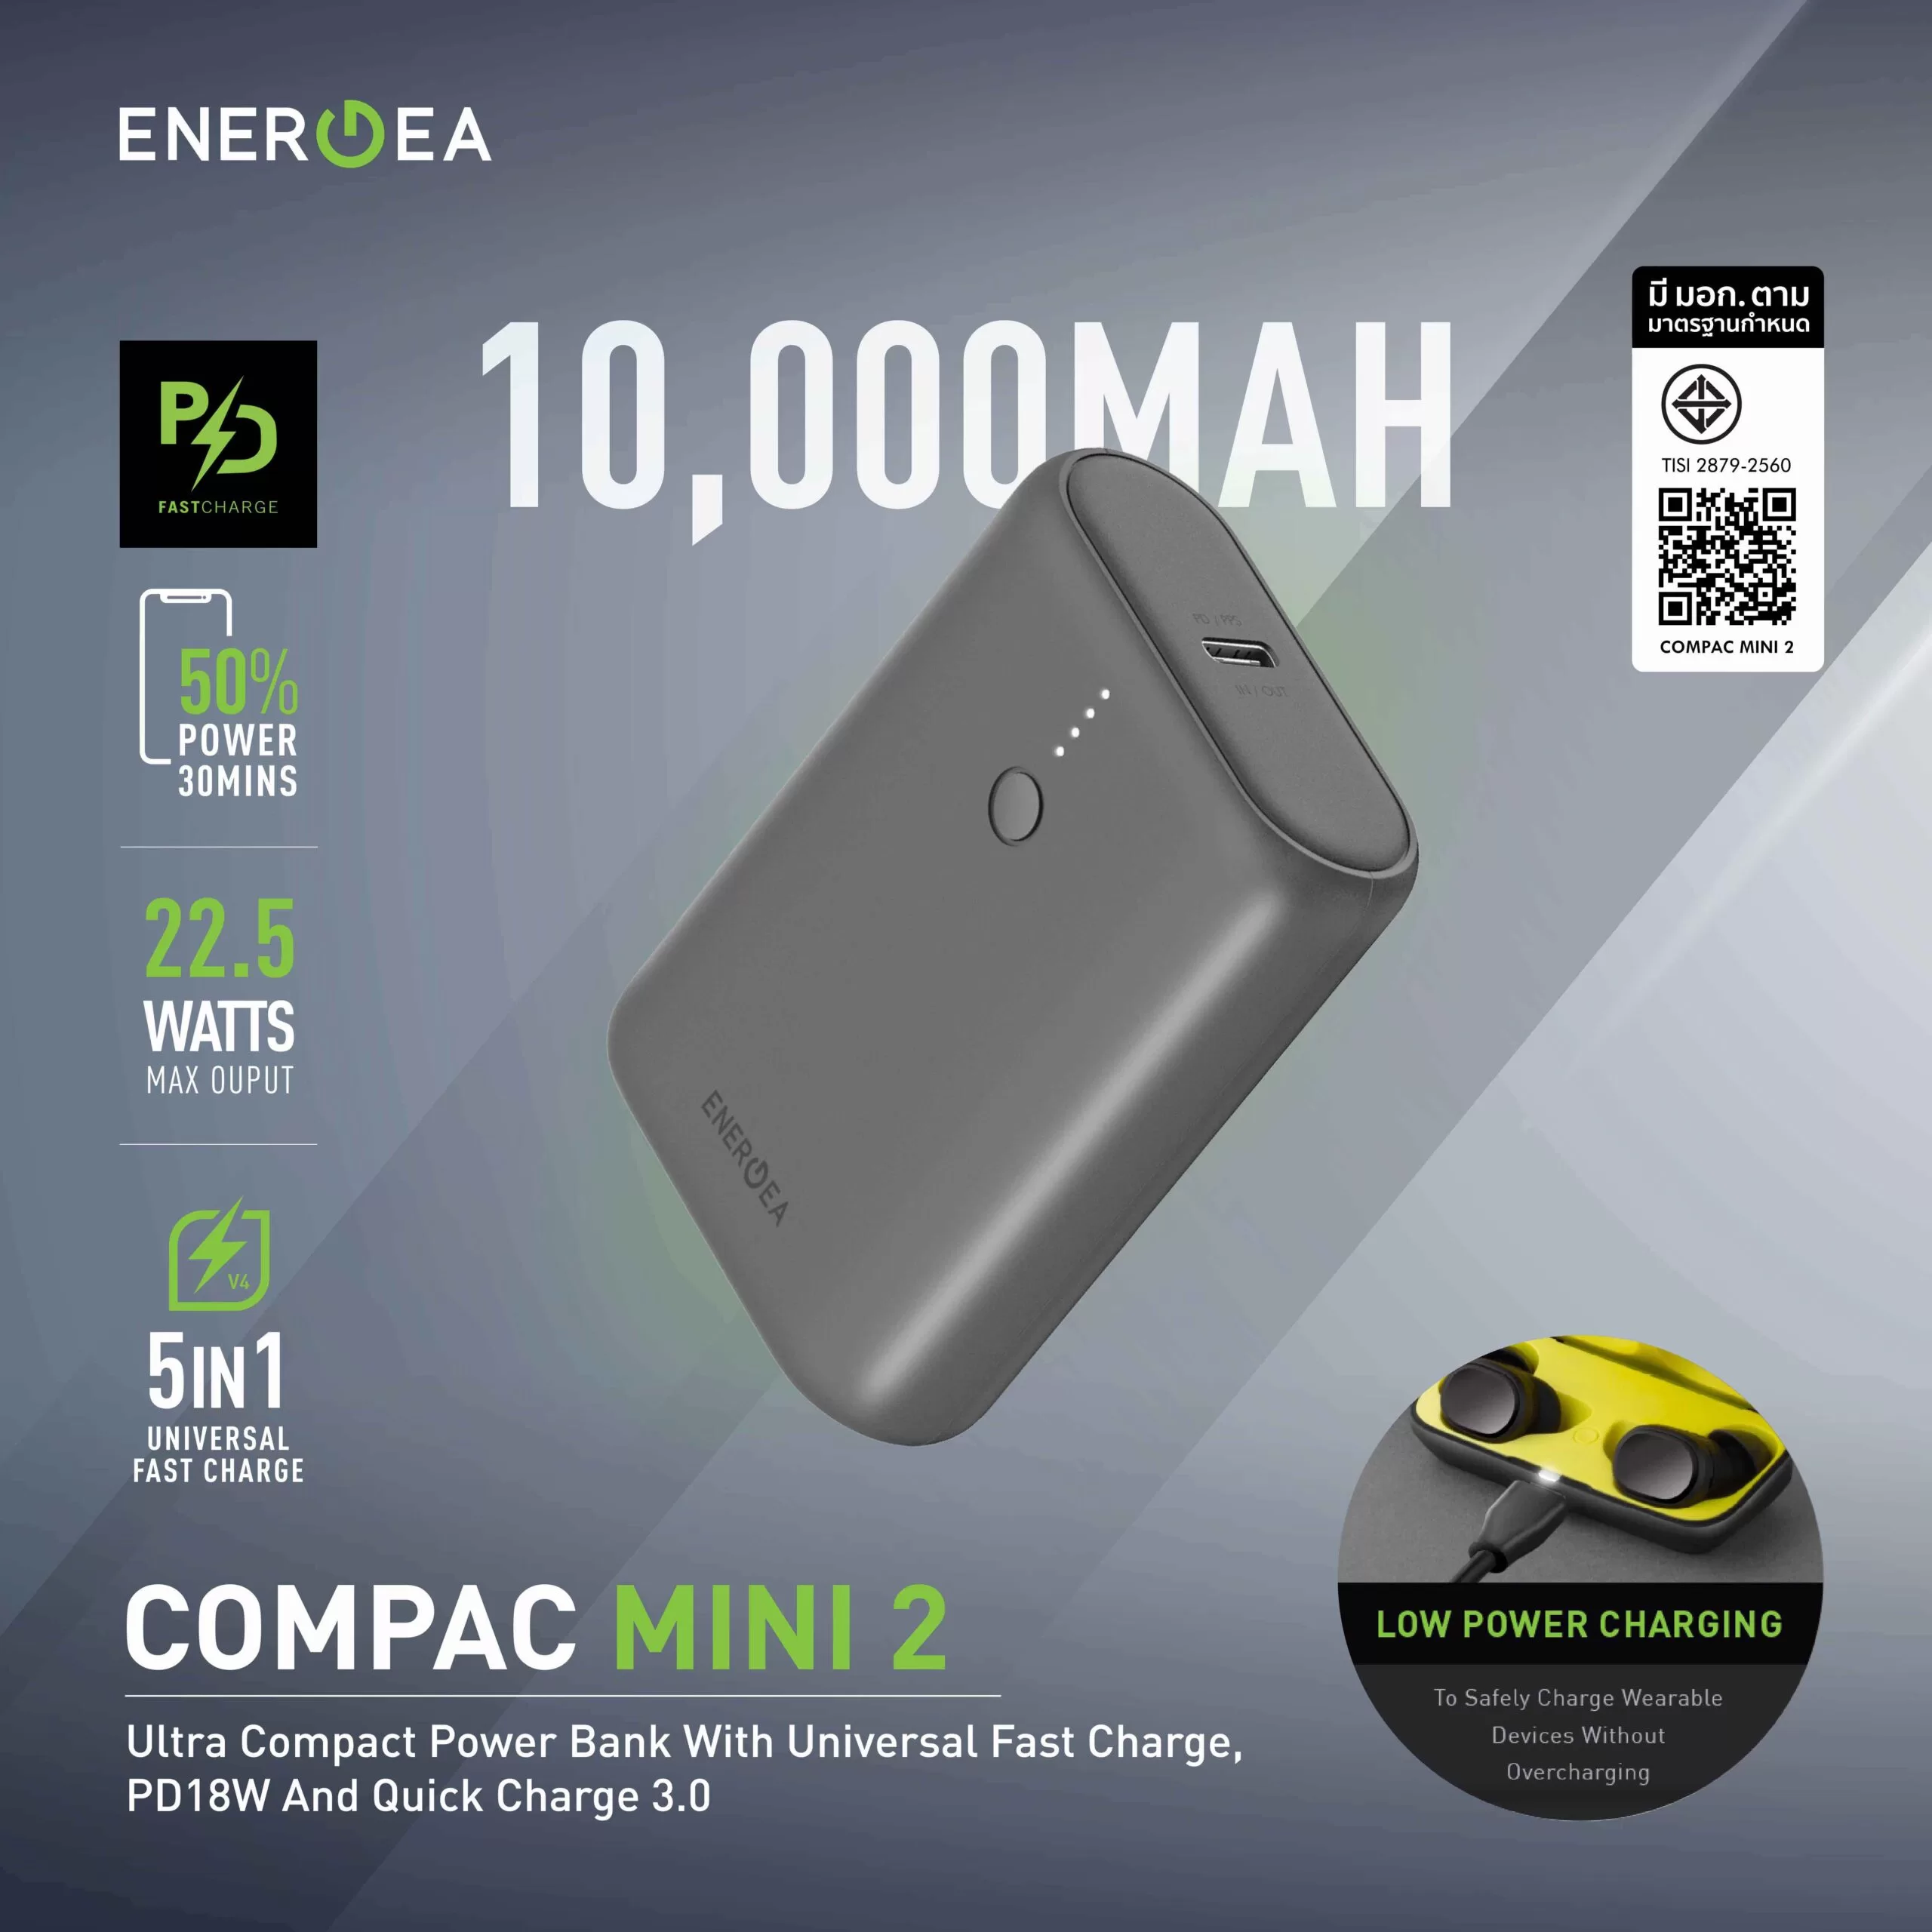 Pic ComPac Mini2 01 scaled | ComPac Mini 2 | อาร์ทีบีฯ ส่งแบตเตอรี่สำรอง 2 รุ่นใหม่ Energea ComPac Mini 2 และ MagPac Mini กะทัดรัด พลังชาร์จเร็วเต็มพิกัด